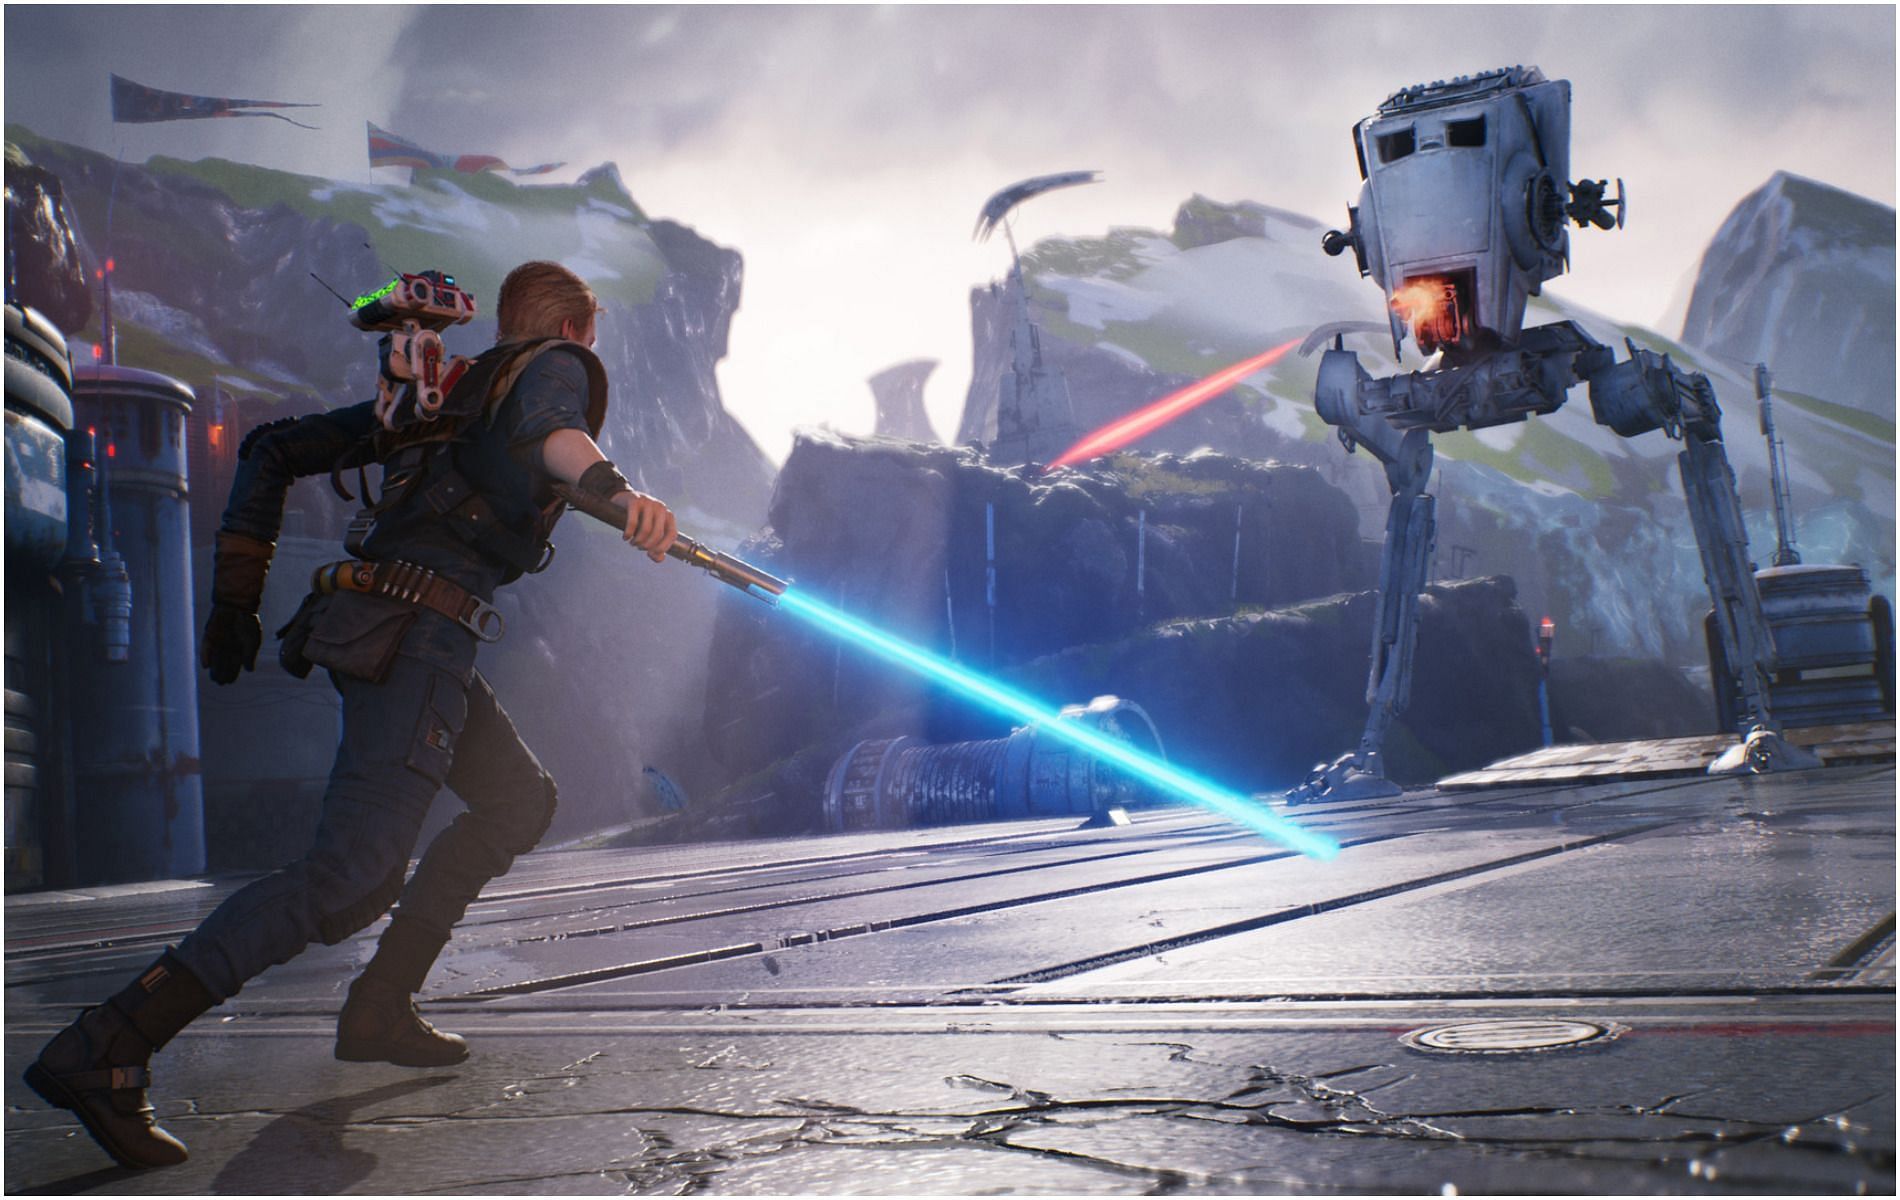 lukke Plys dukke tilbage 5 Star Wars games to get into in anticipation of Star Wars Jedi 2